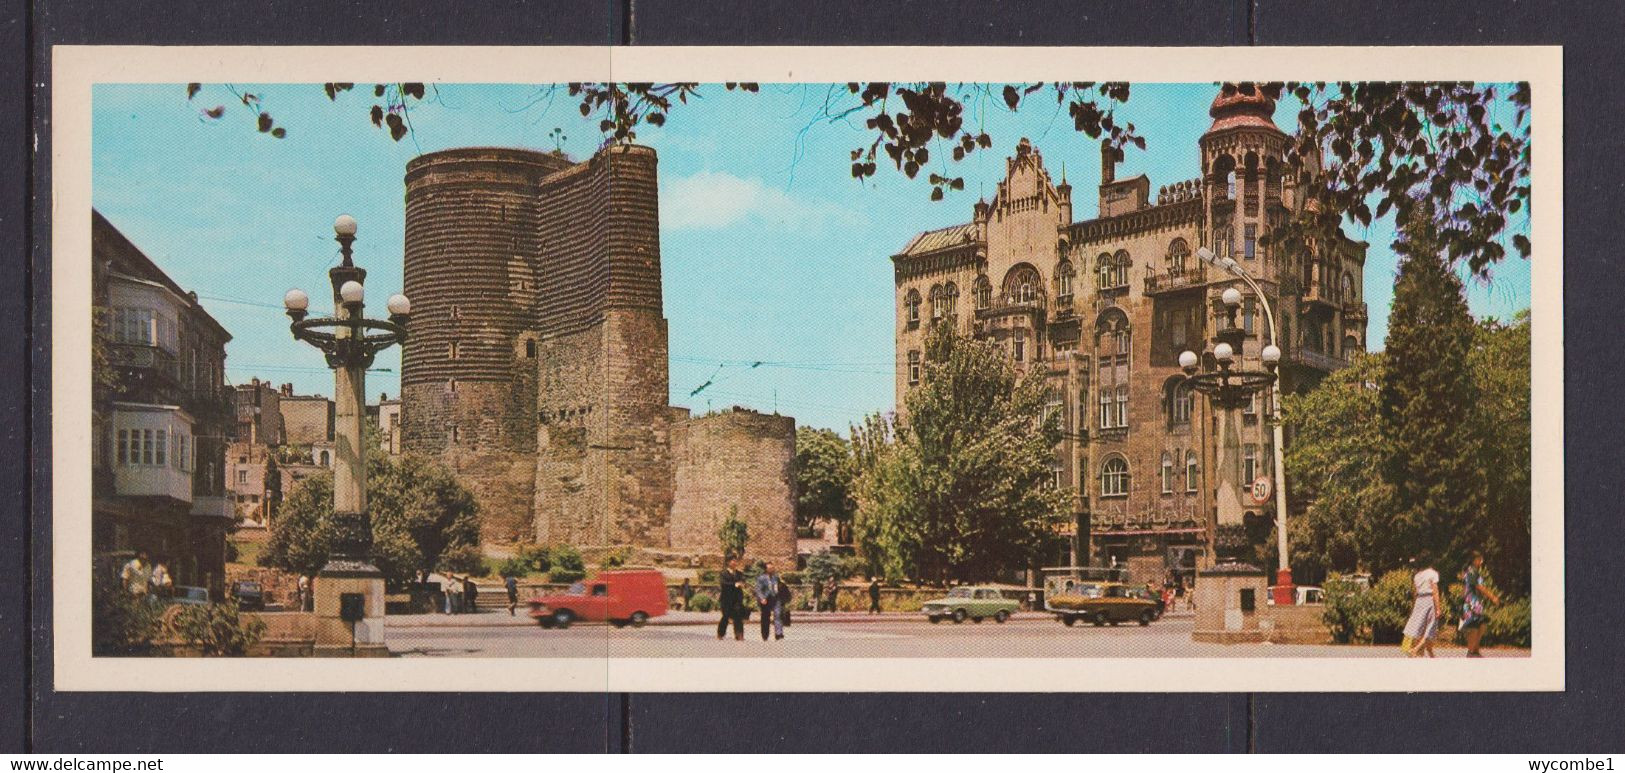 AZERBAIJAN  - Baku Maidens Tower Large Unused Postcard - Azerbaïjan